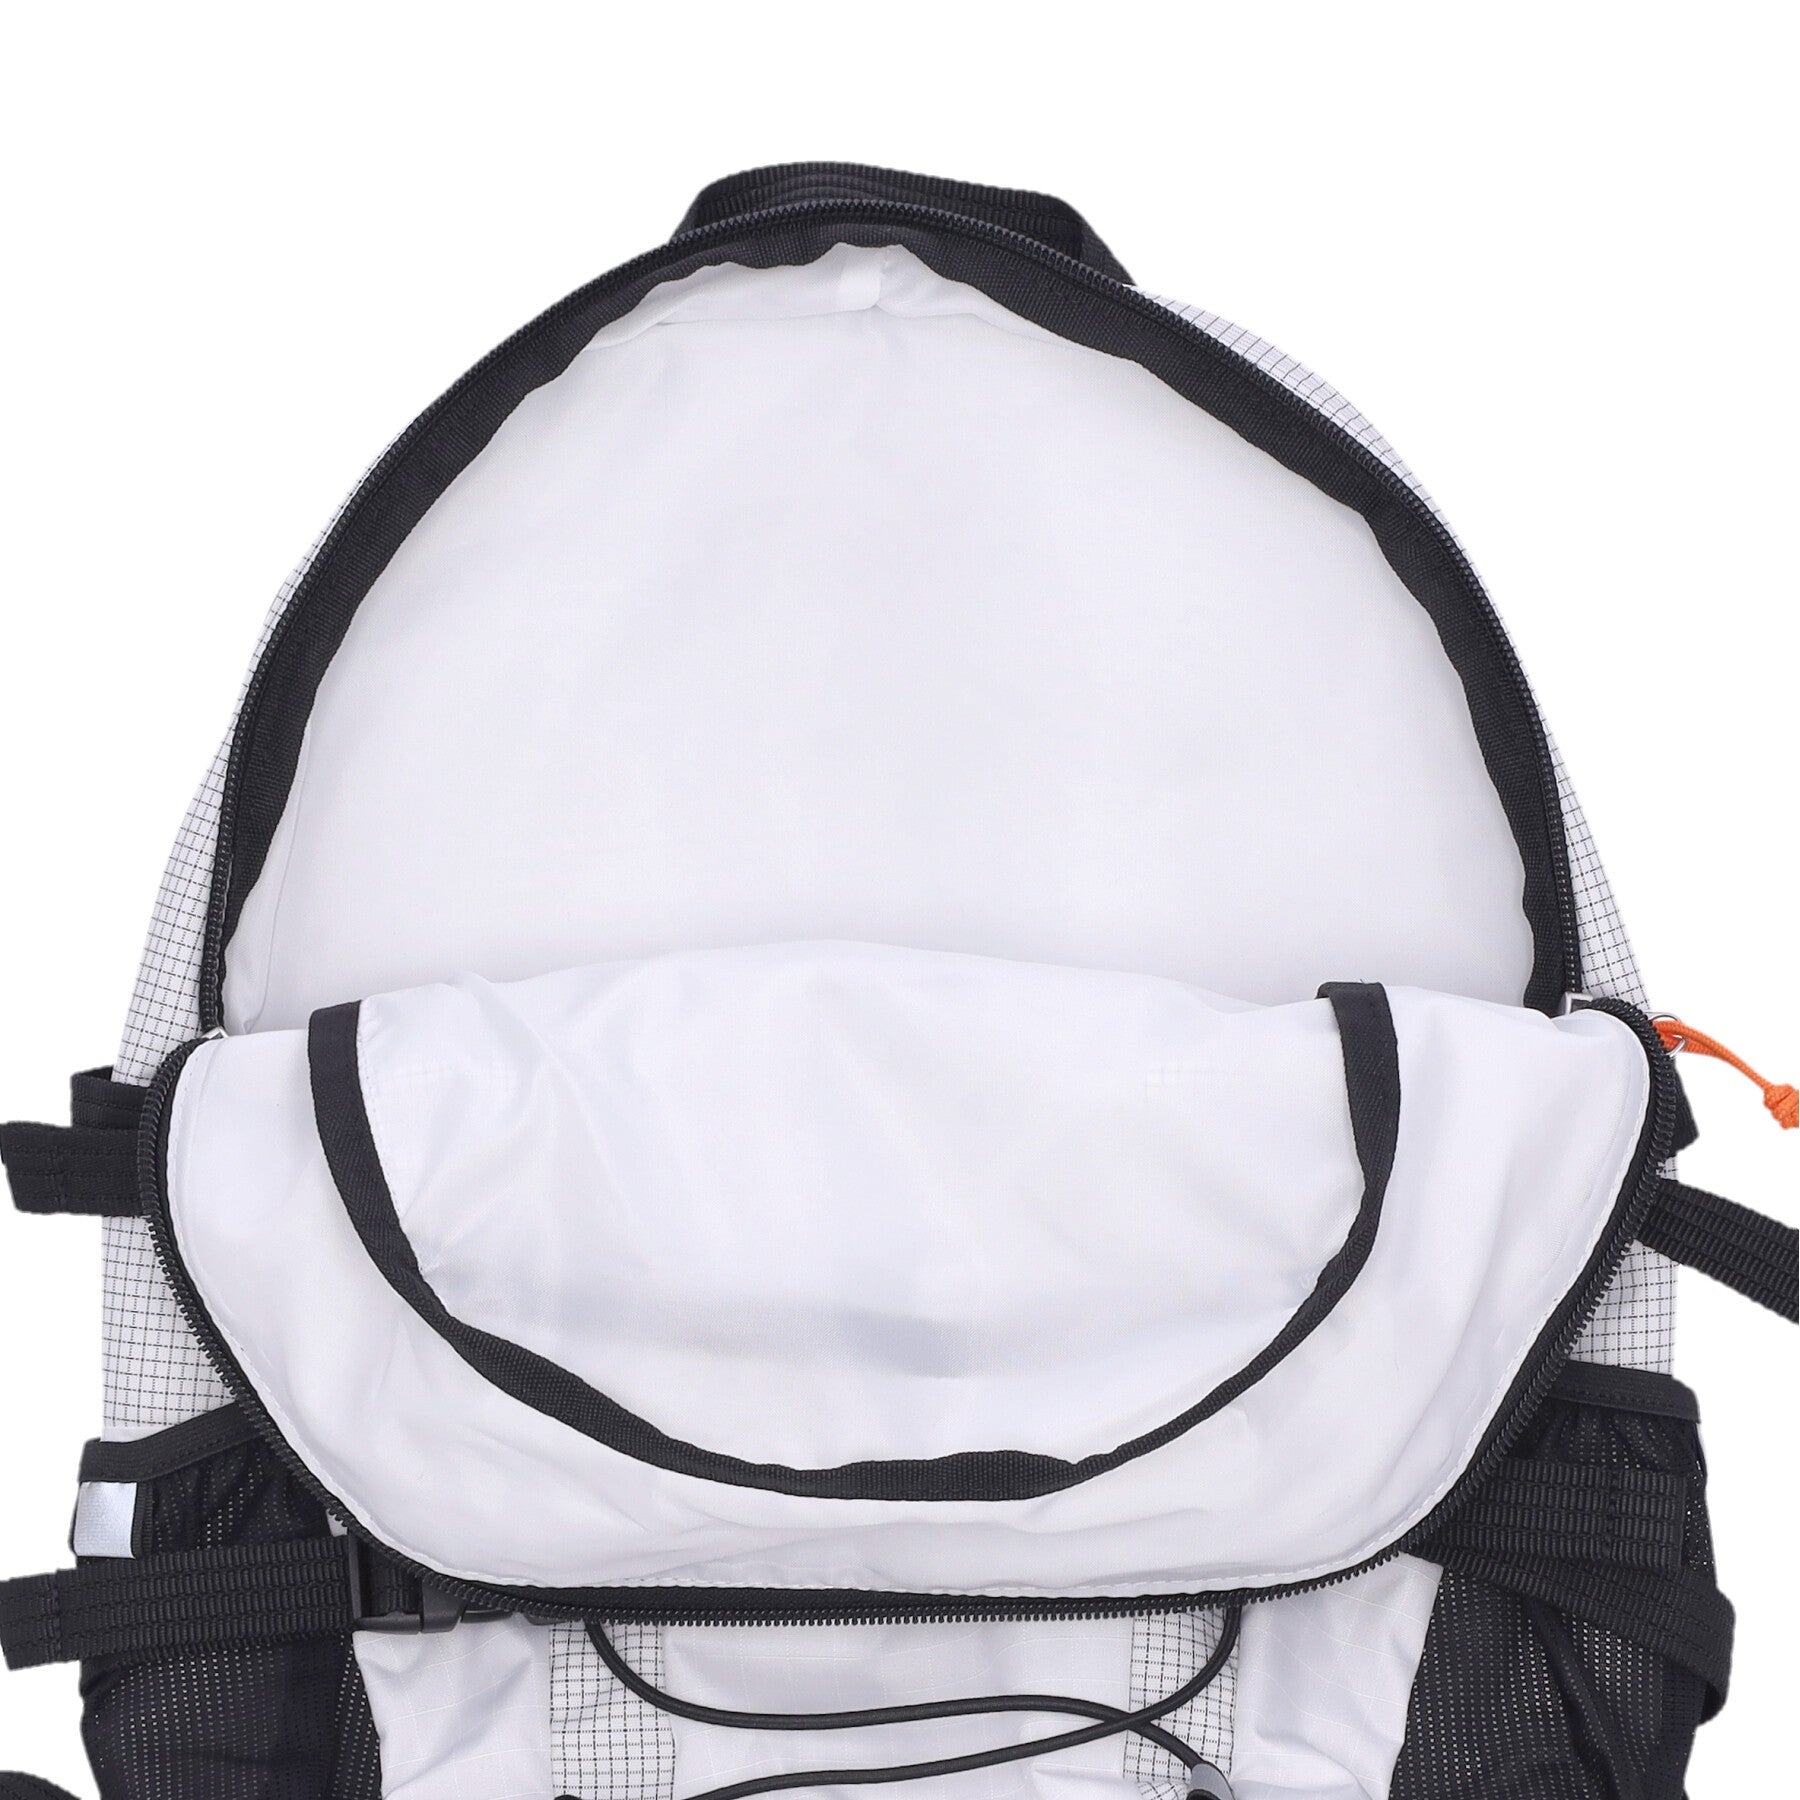 Adidas, Zaino Uomo Adventure Large Backpack, 